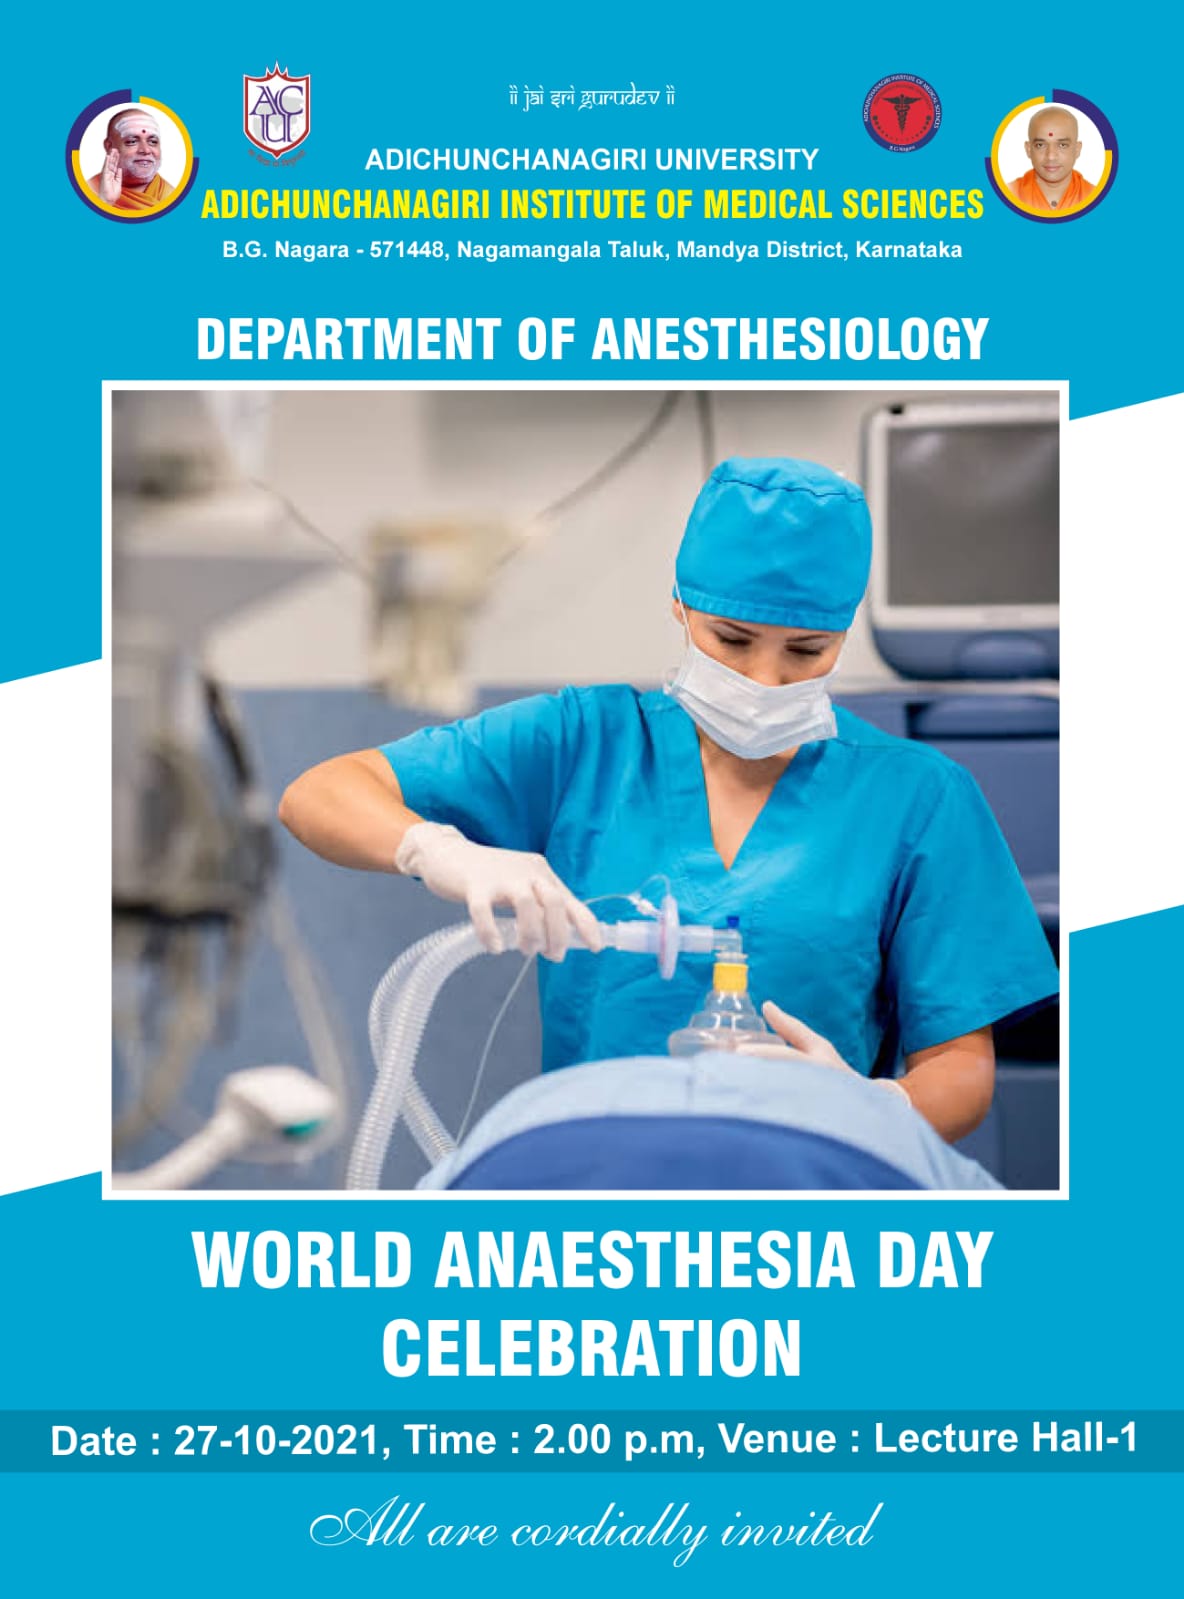 World Anesthesia Day Celebration Adichunchanagiri Institute of